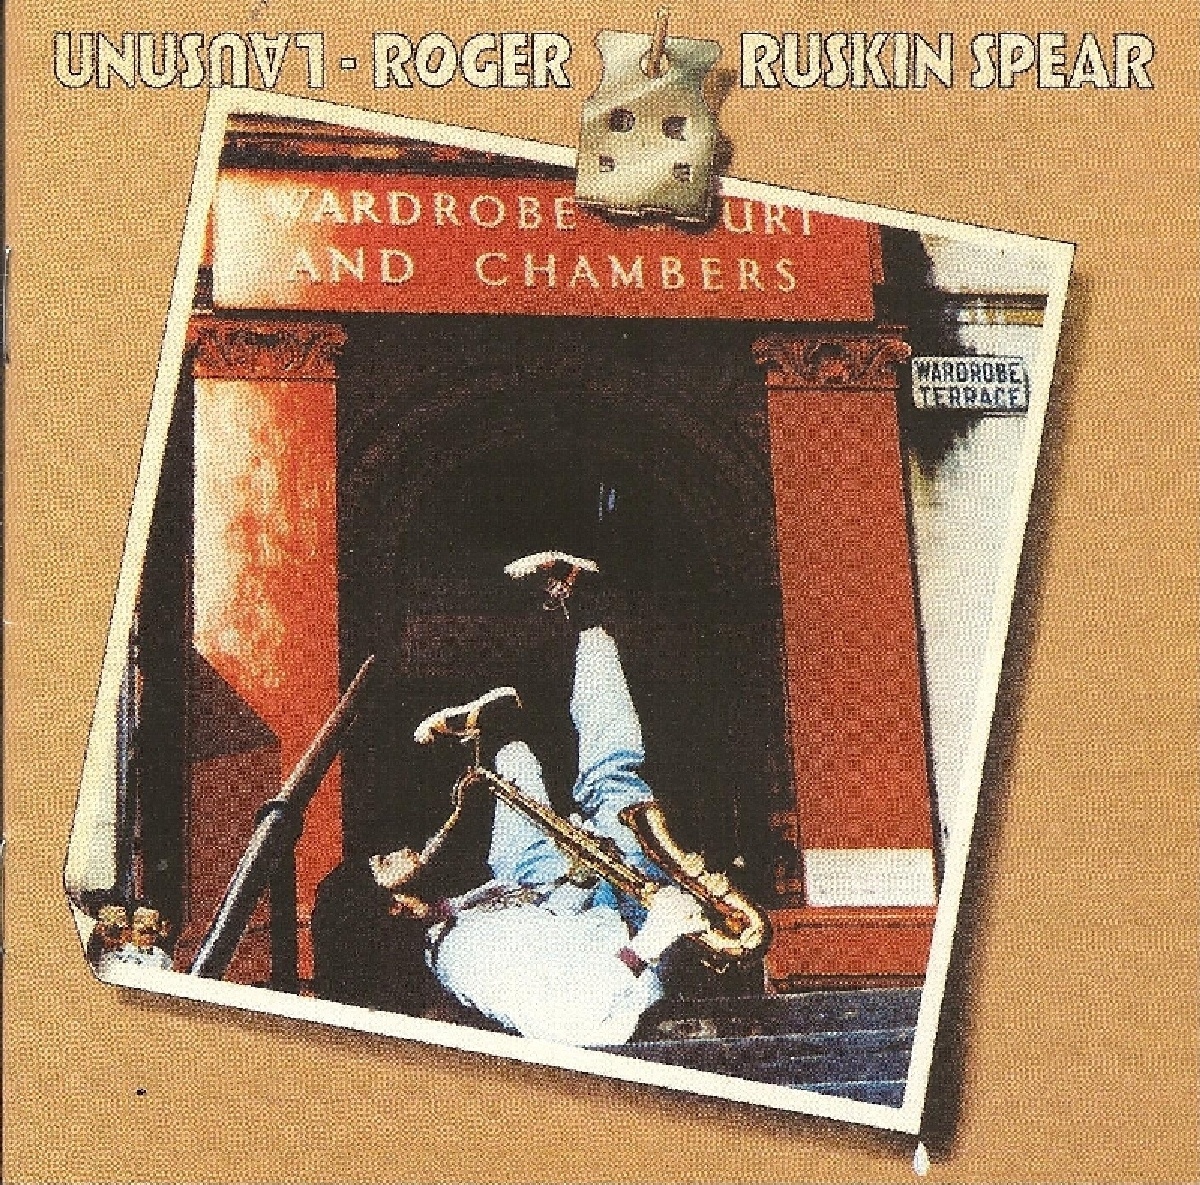 Unusual - Roger Ruskin Spear. (CD)